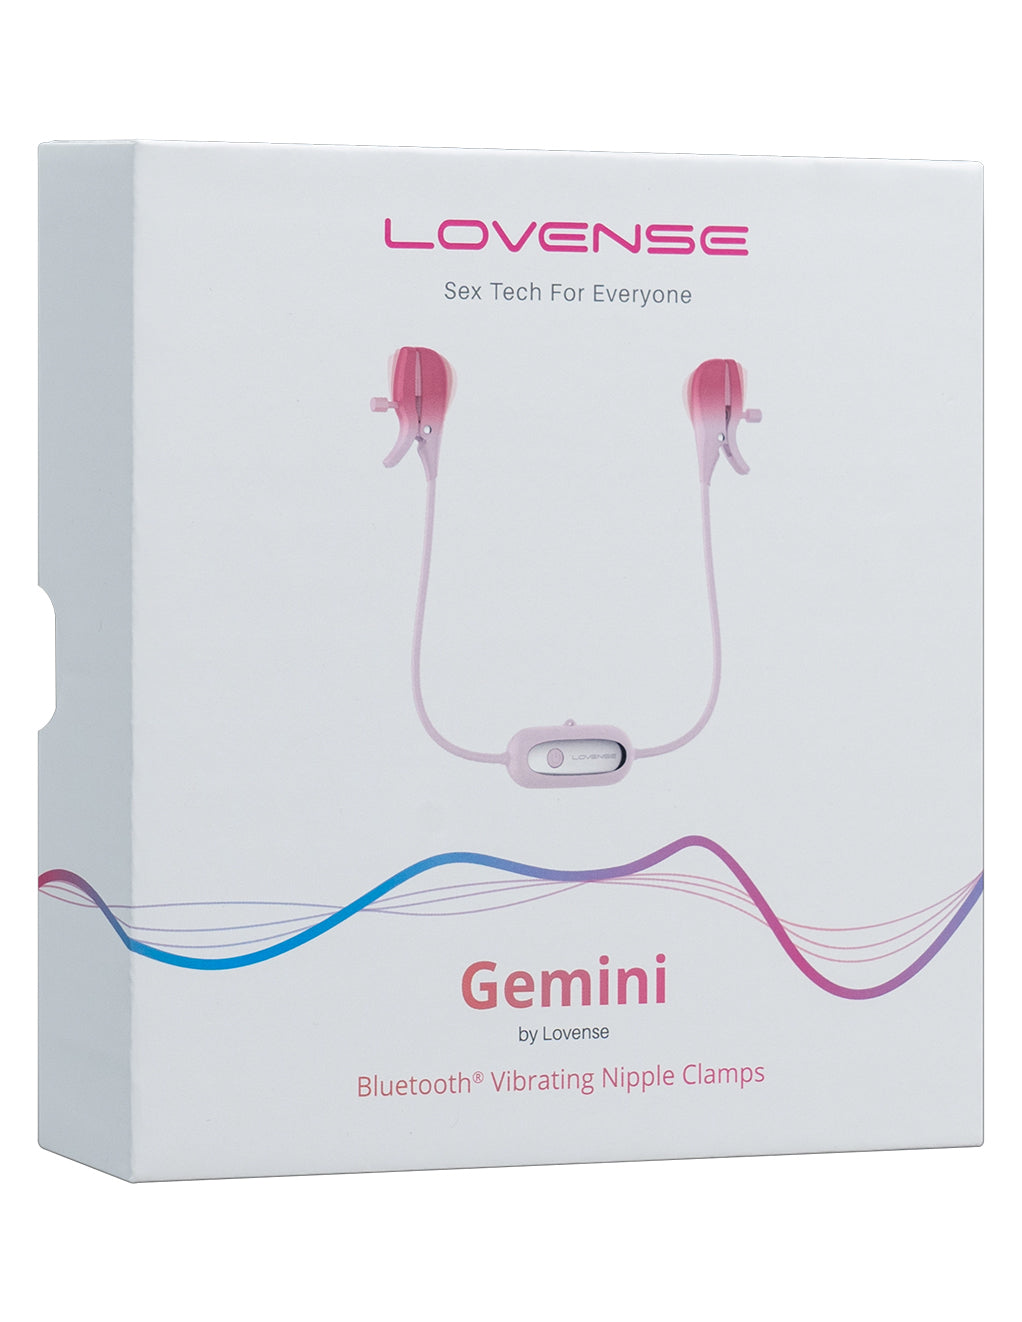 Lovense Gemini - Front of Box